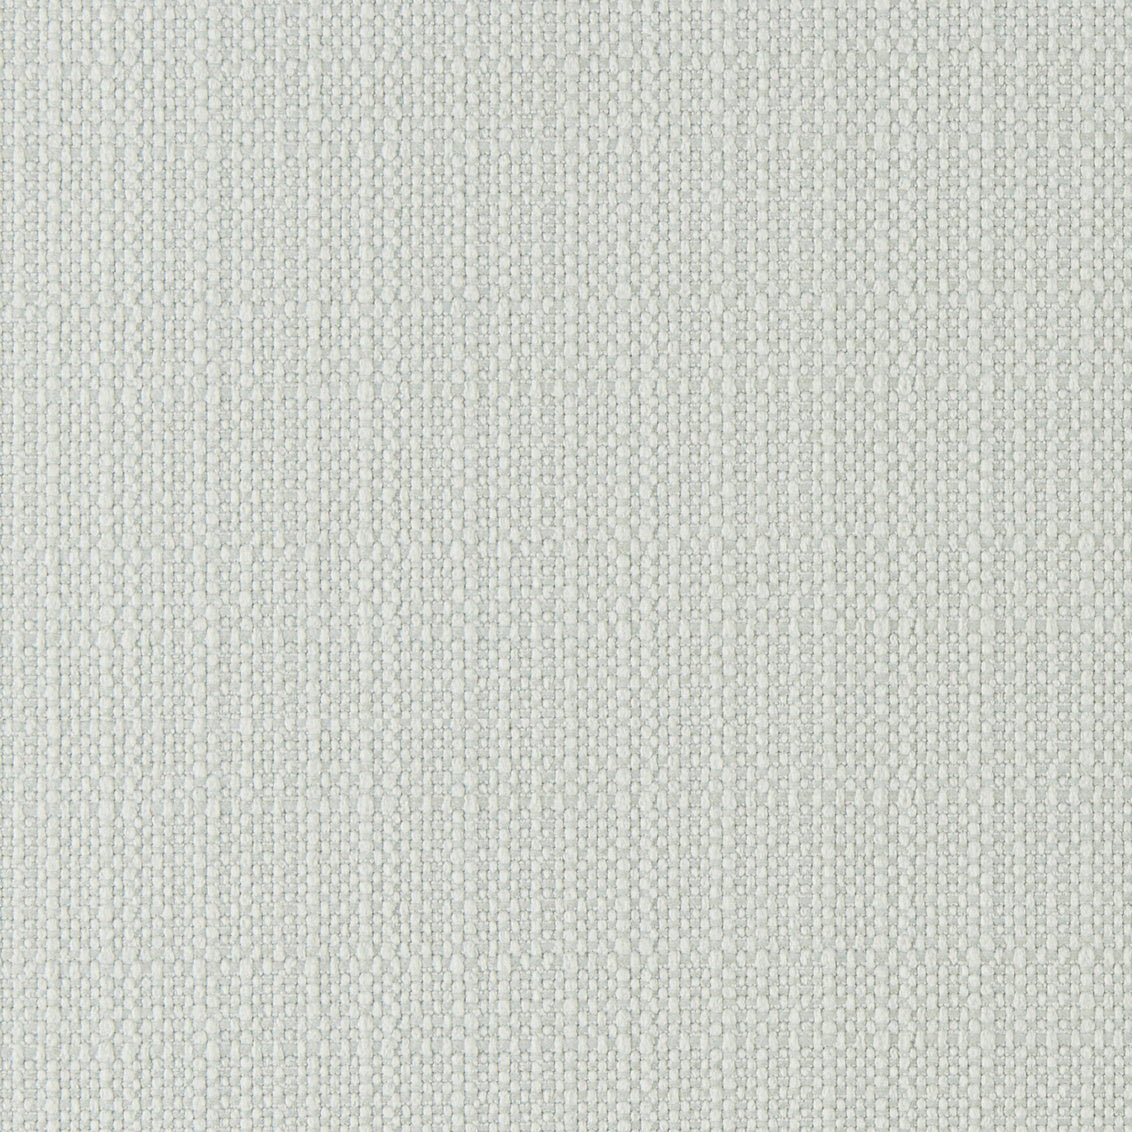 Klein : Loose Woven Larger Texture Linen